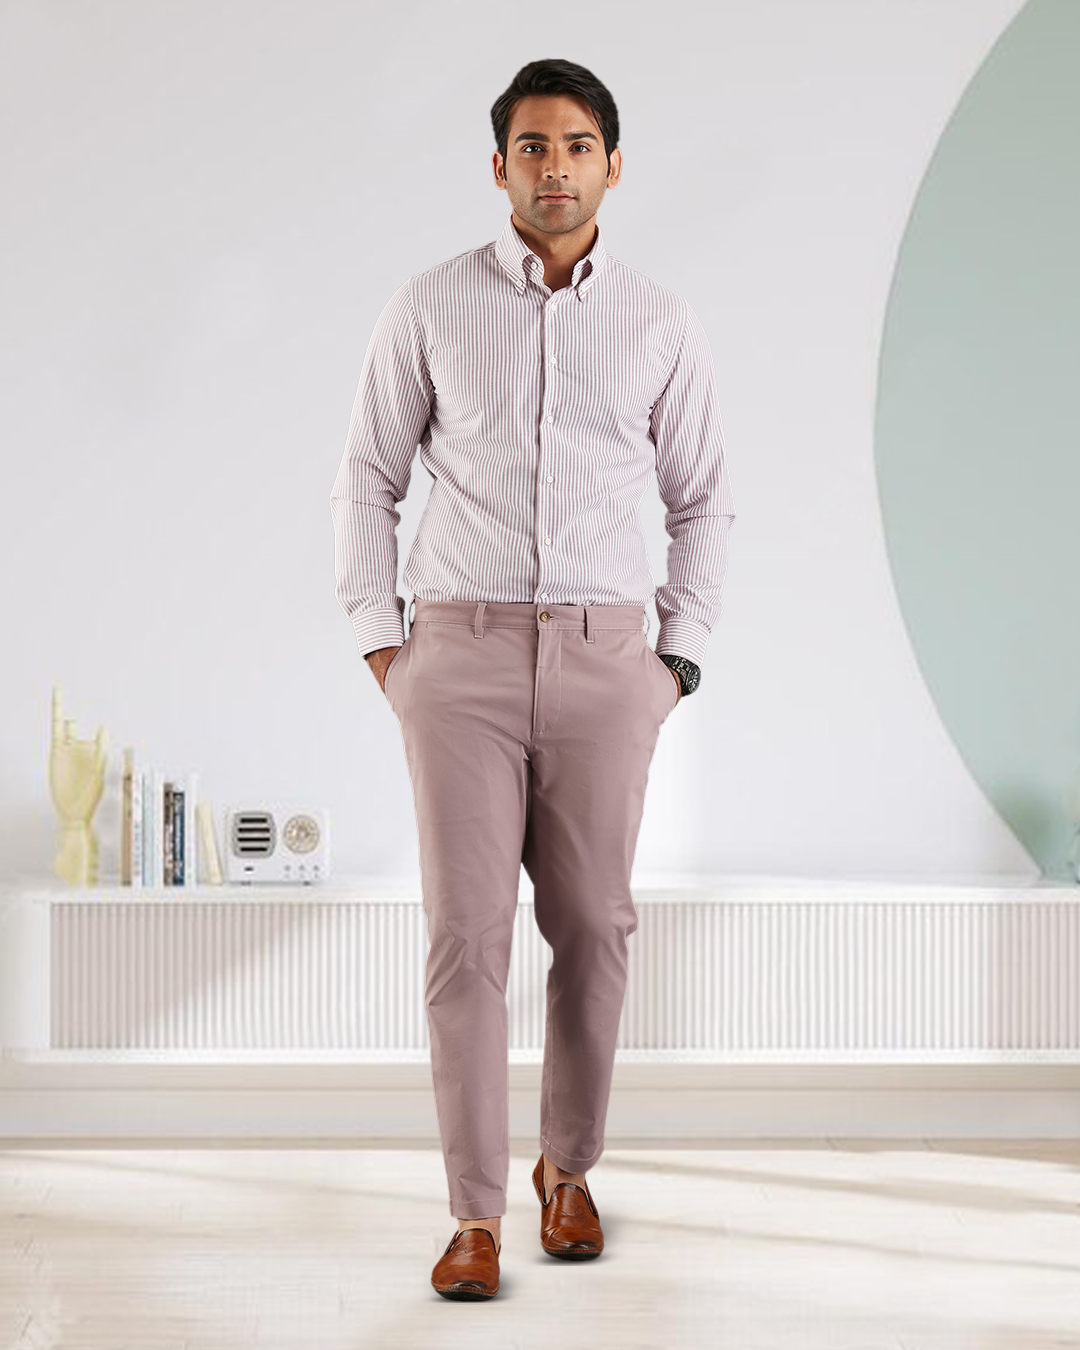 Model wearing custom Genoa Chino pants for men by Luxire in purple fade hands in pockets